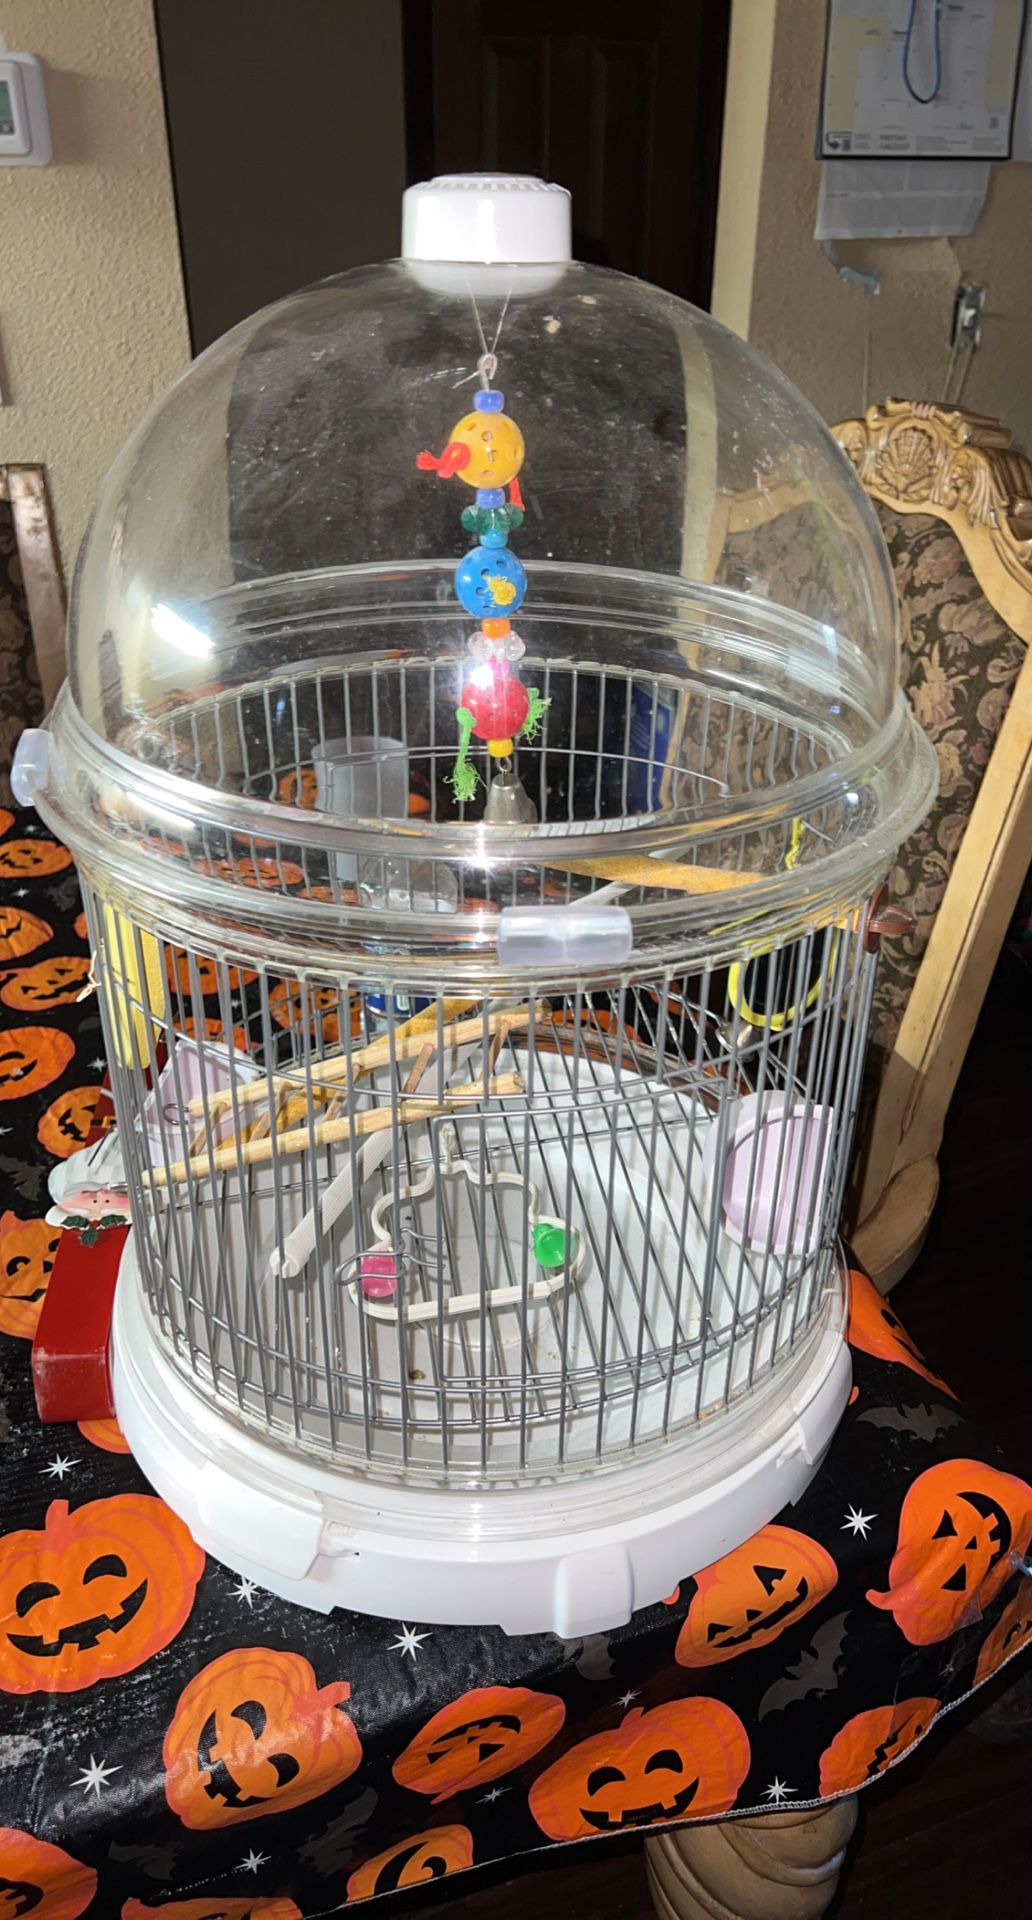 Bird Cage $20